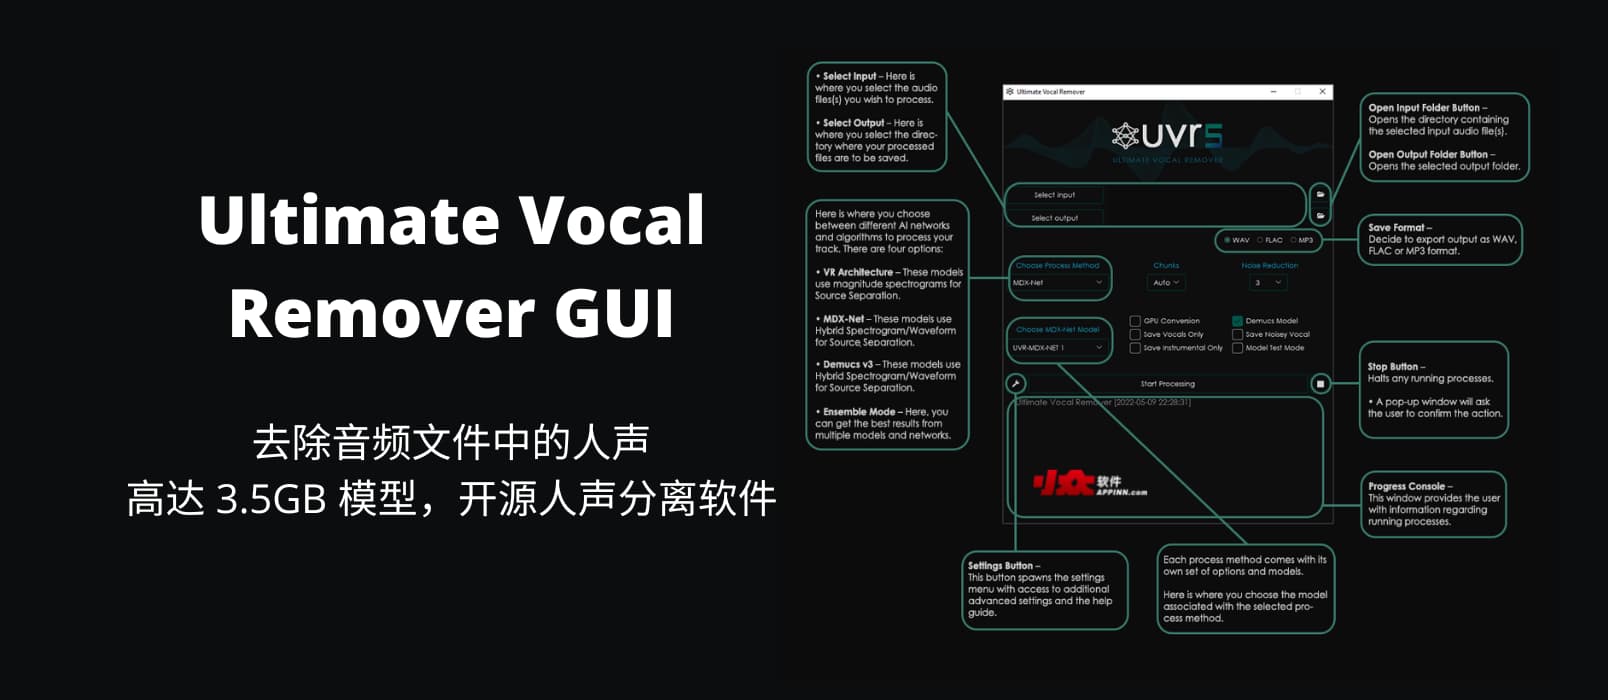 Ultimate Vocal Remover GUI – 去除音频文件中的人声，高达 3.5GB 模型的开源人声分离软件